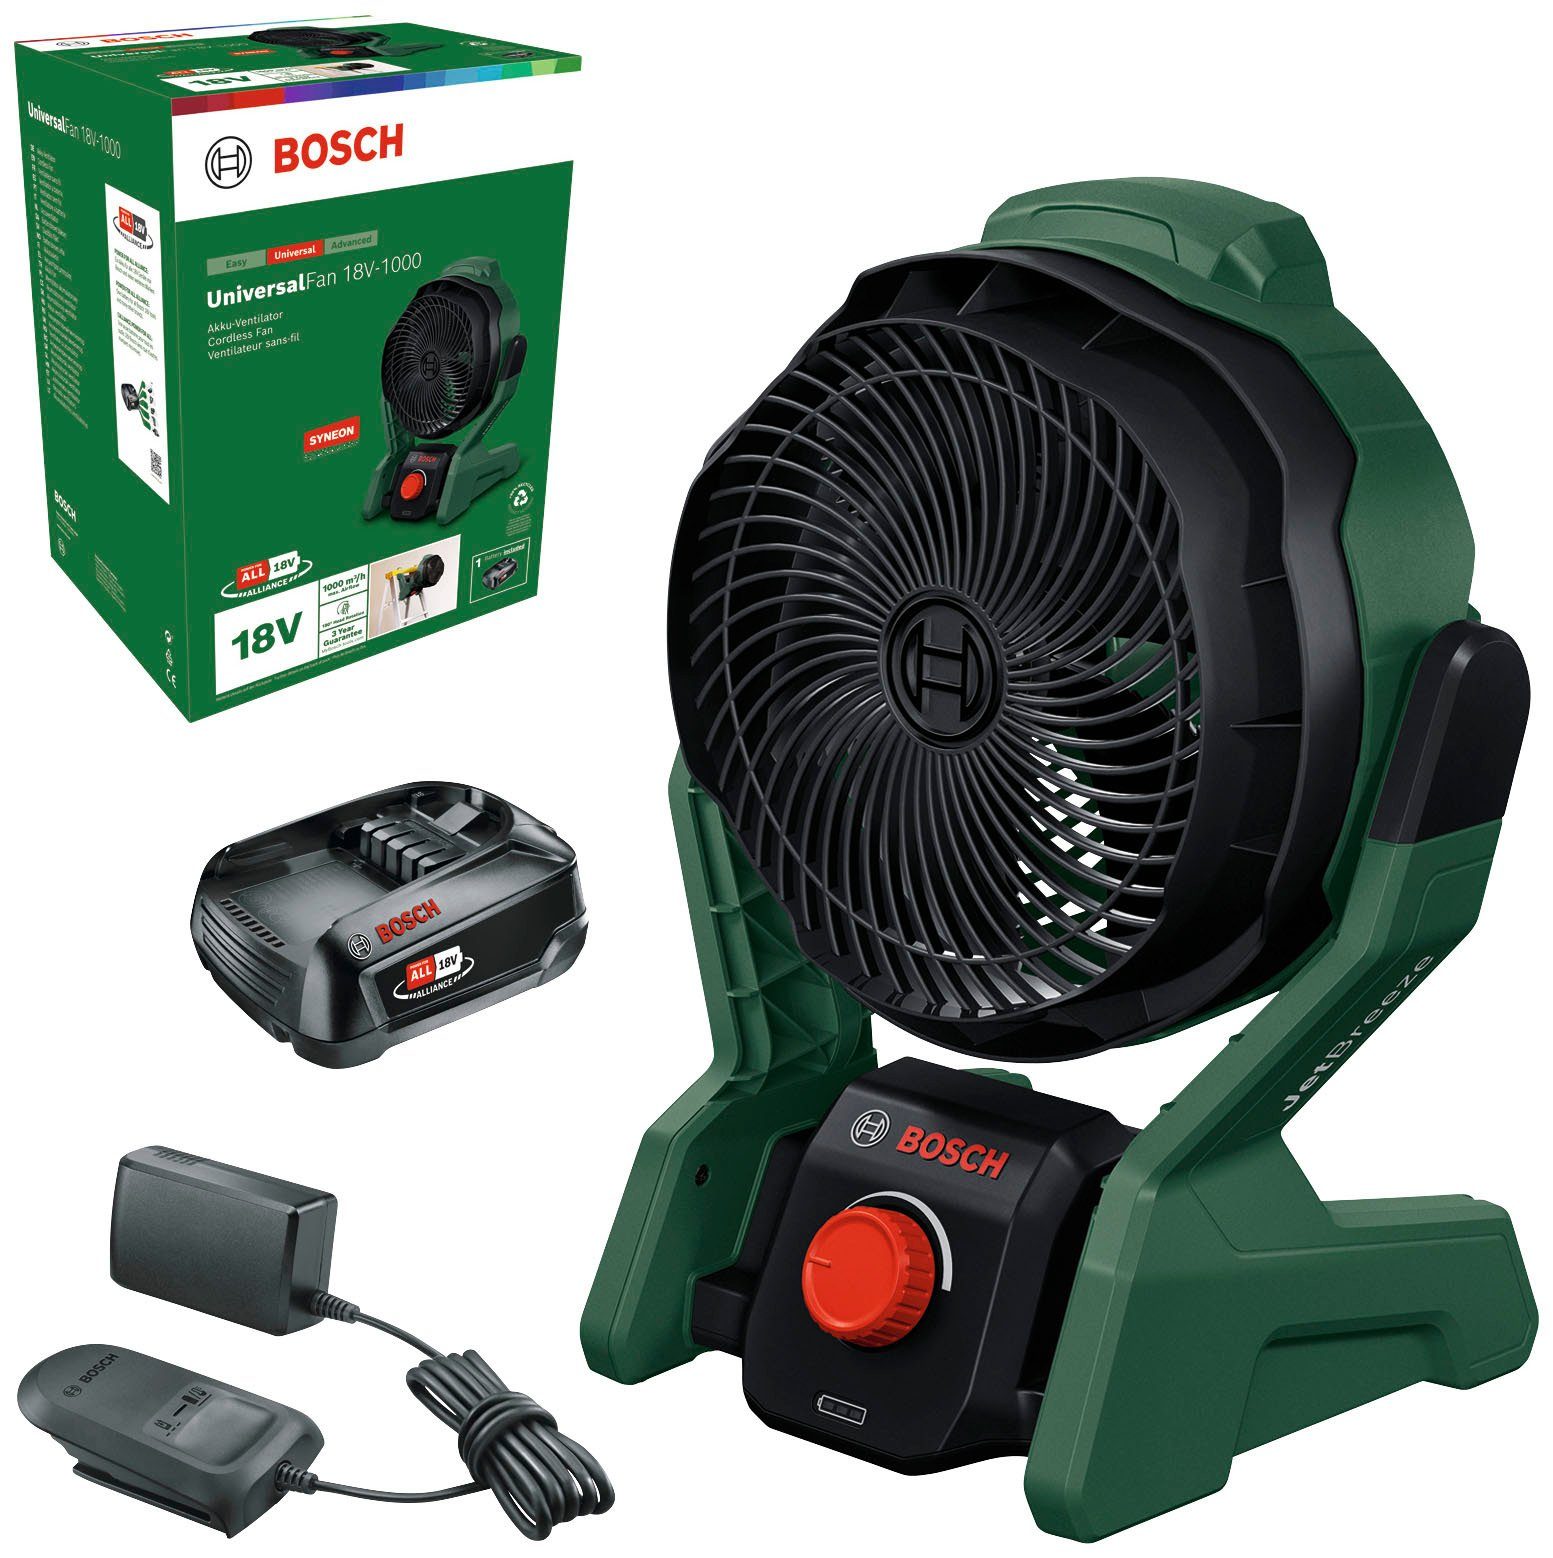 inkl. Bosch Akku & 18V-1000, Garden UniversalFan Home Ladegerät Standventilator und